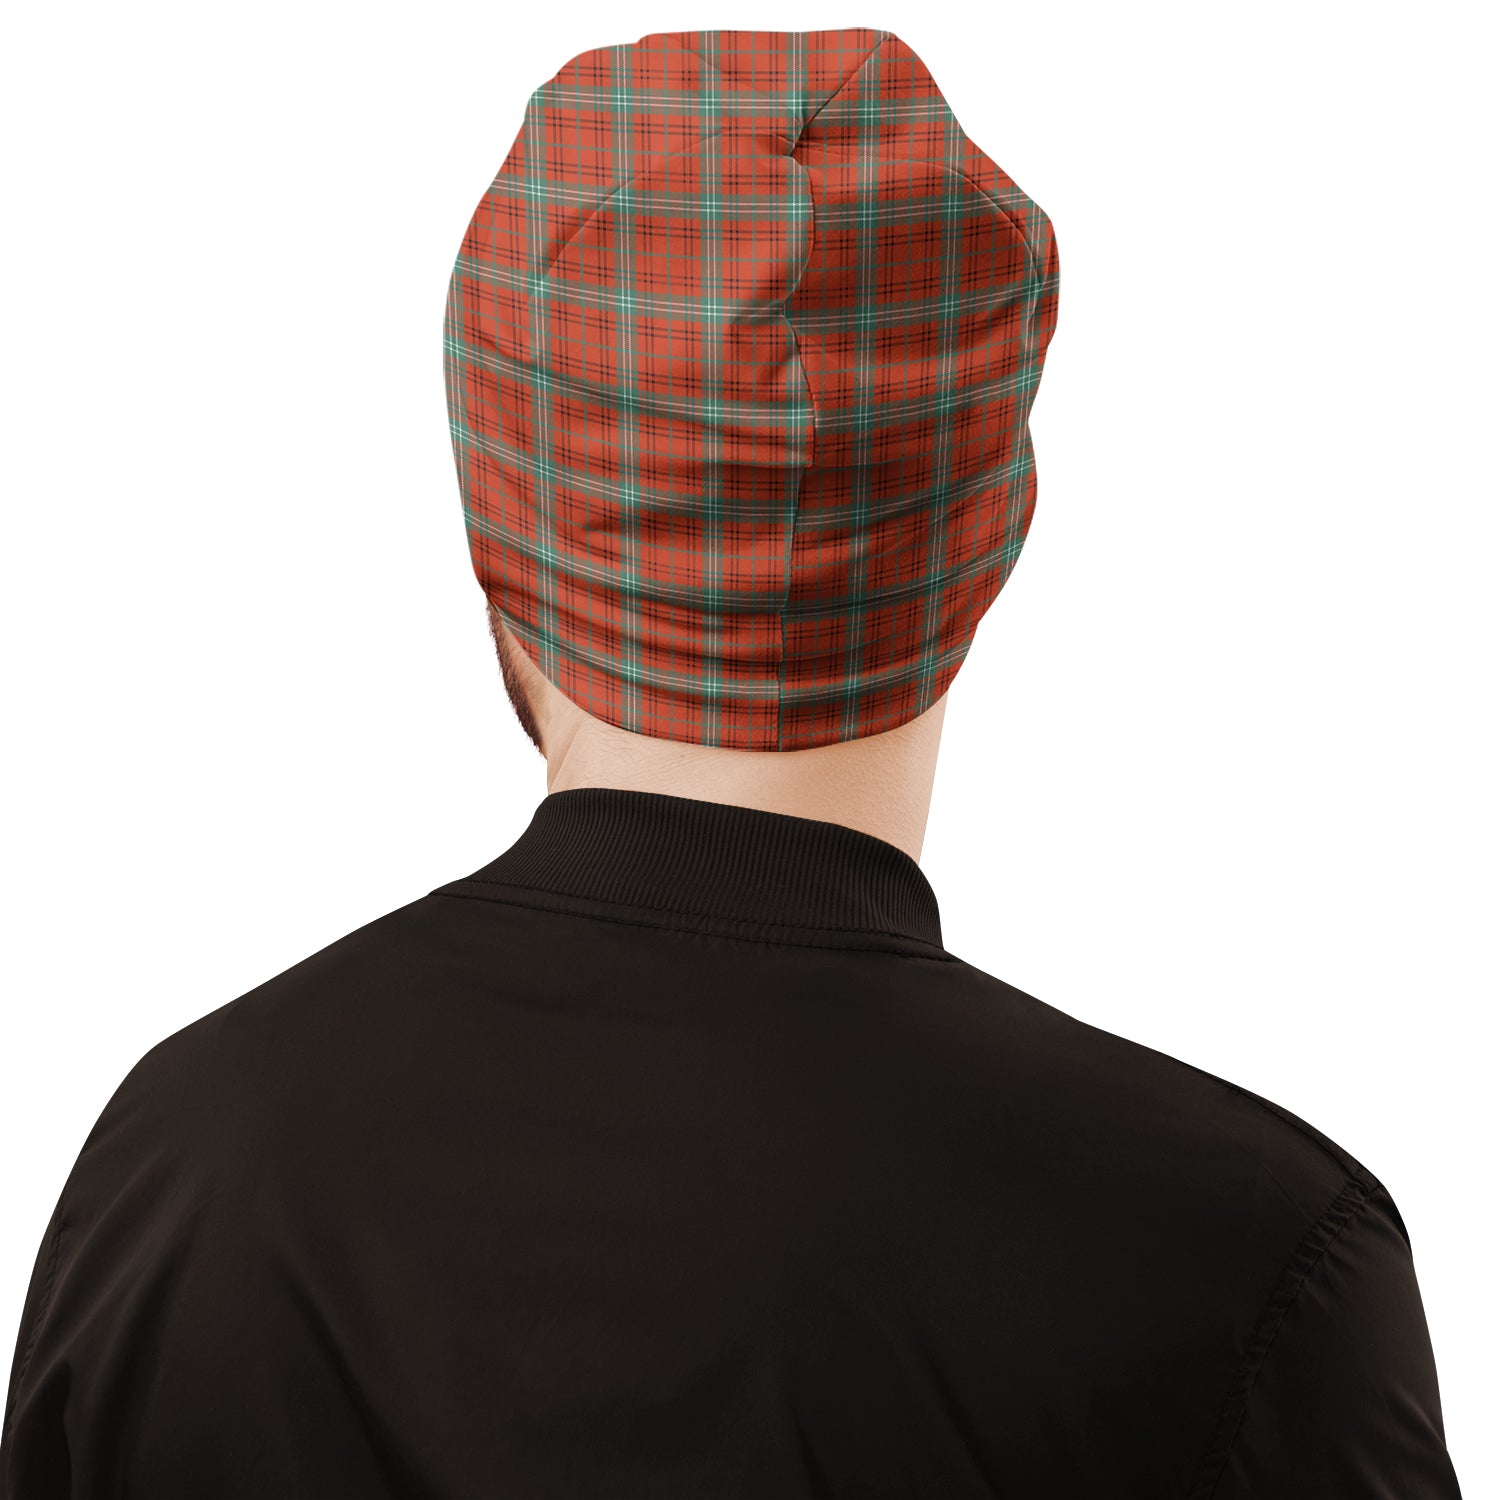 morrison-red-ancient-tartan-beanies-hat